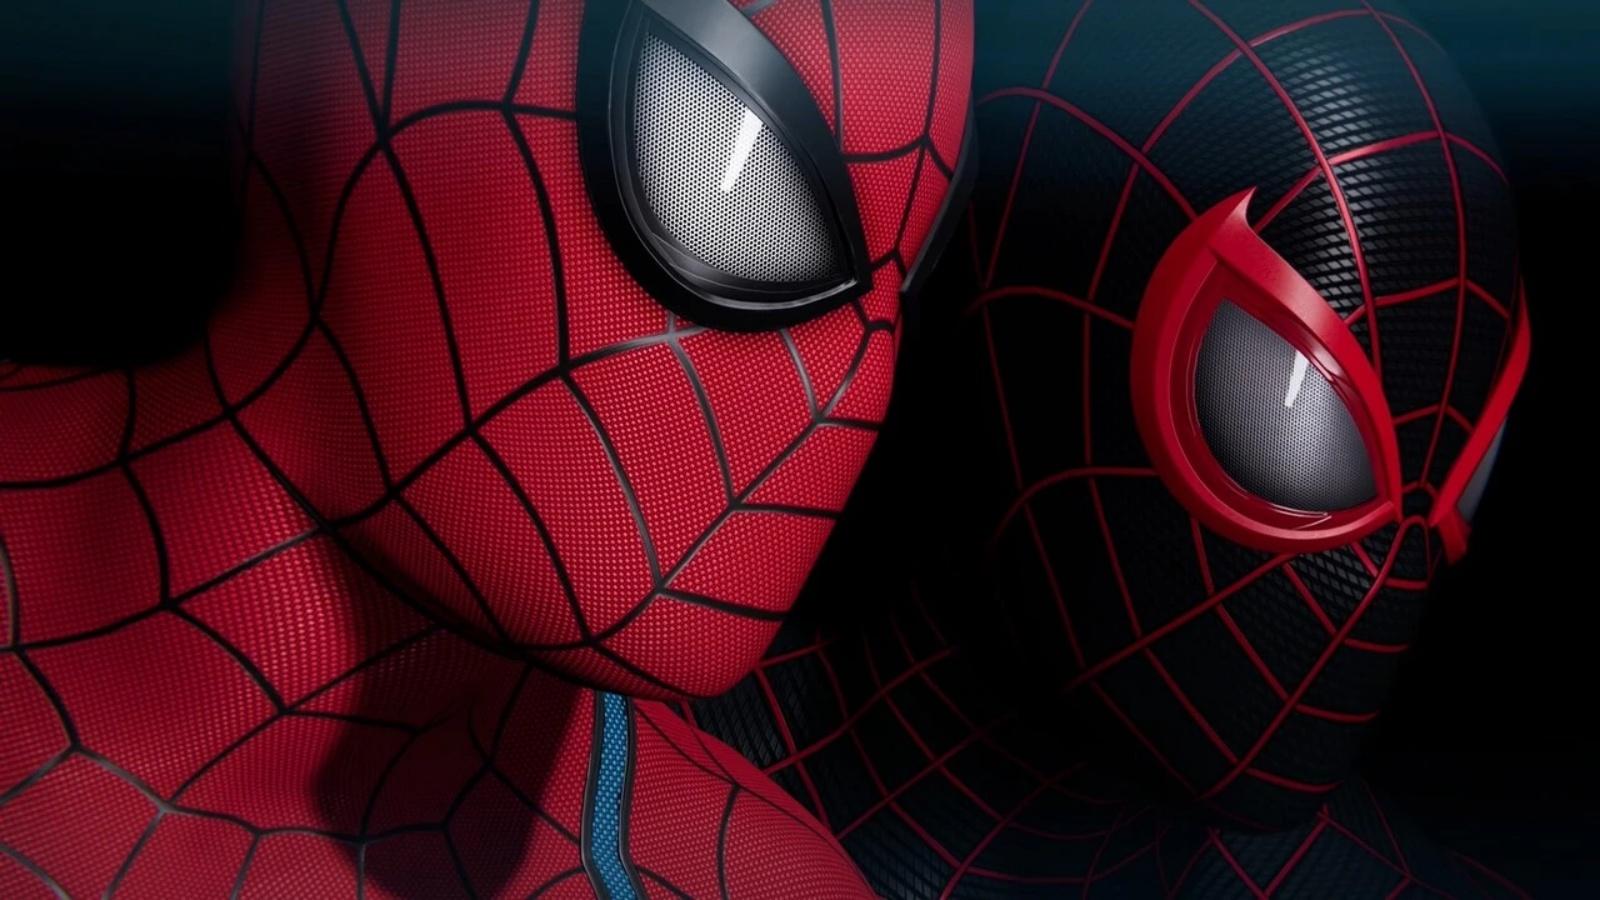 New Marvel's Spider-Man 2 PS5 Trailer Teaser Released Online